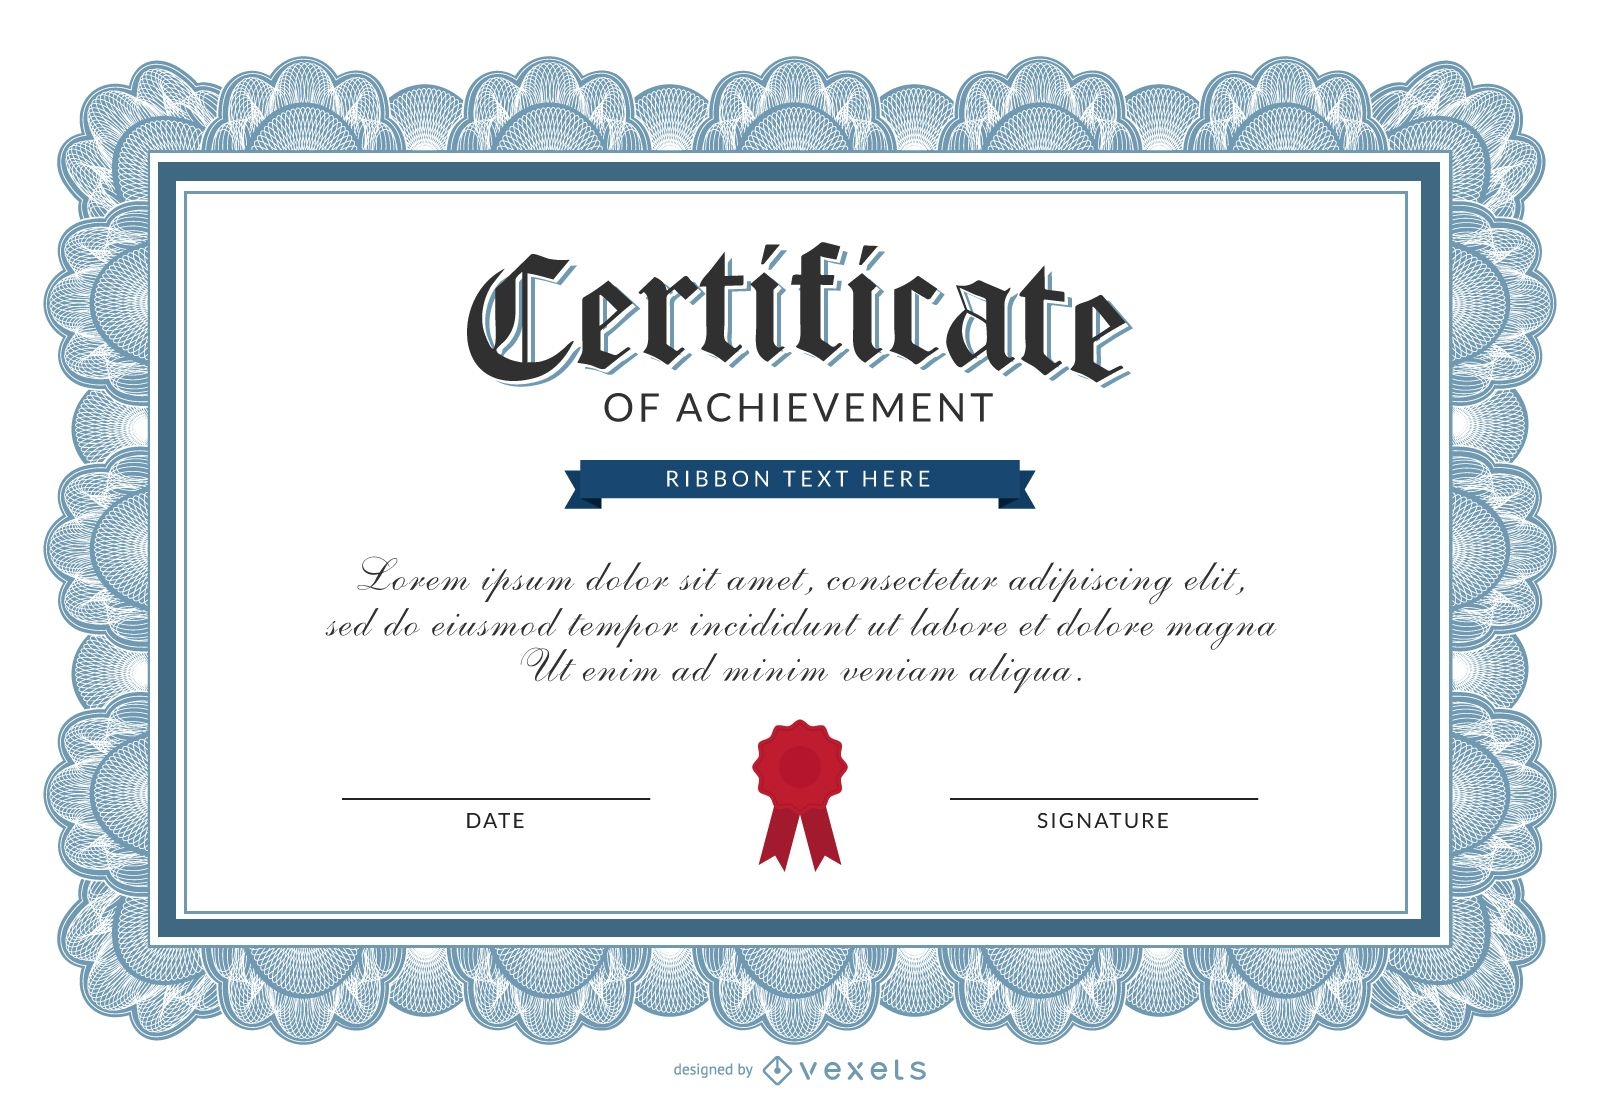 Sample Certificate Of Achievement Wording